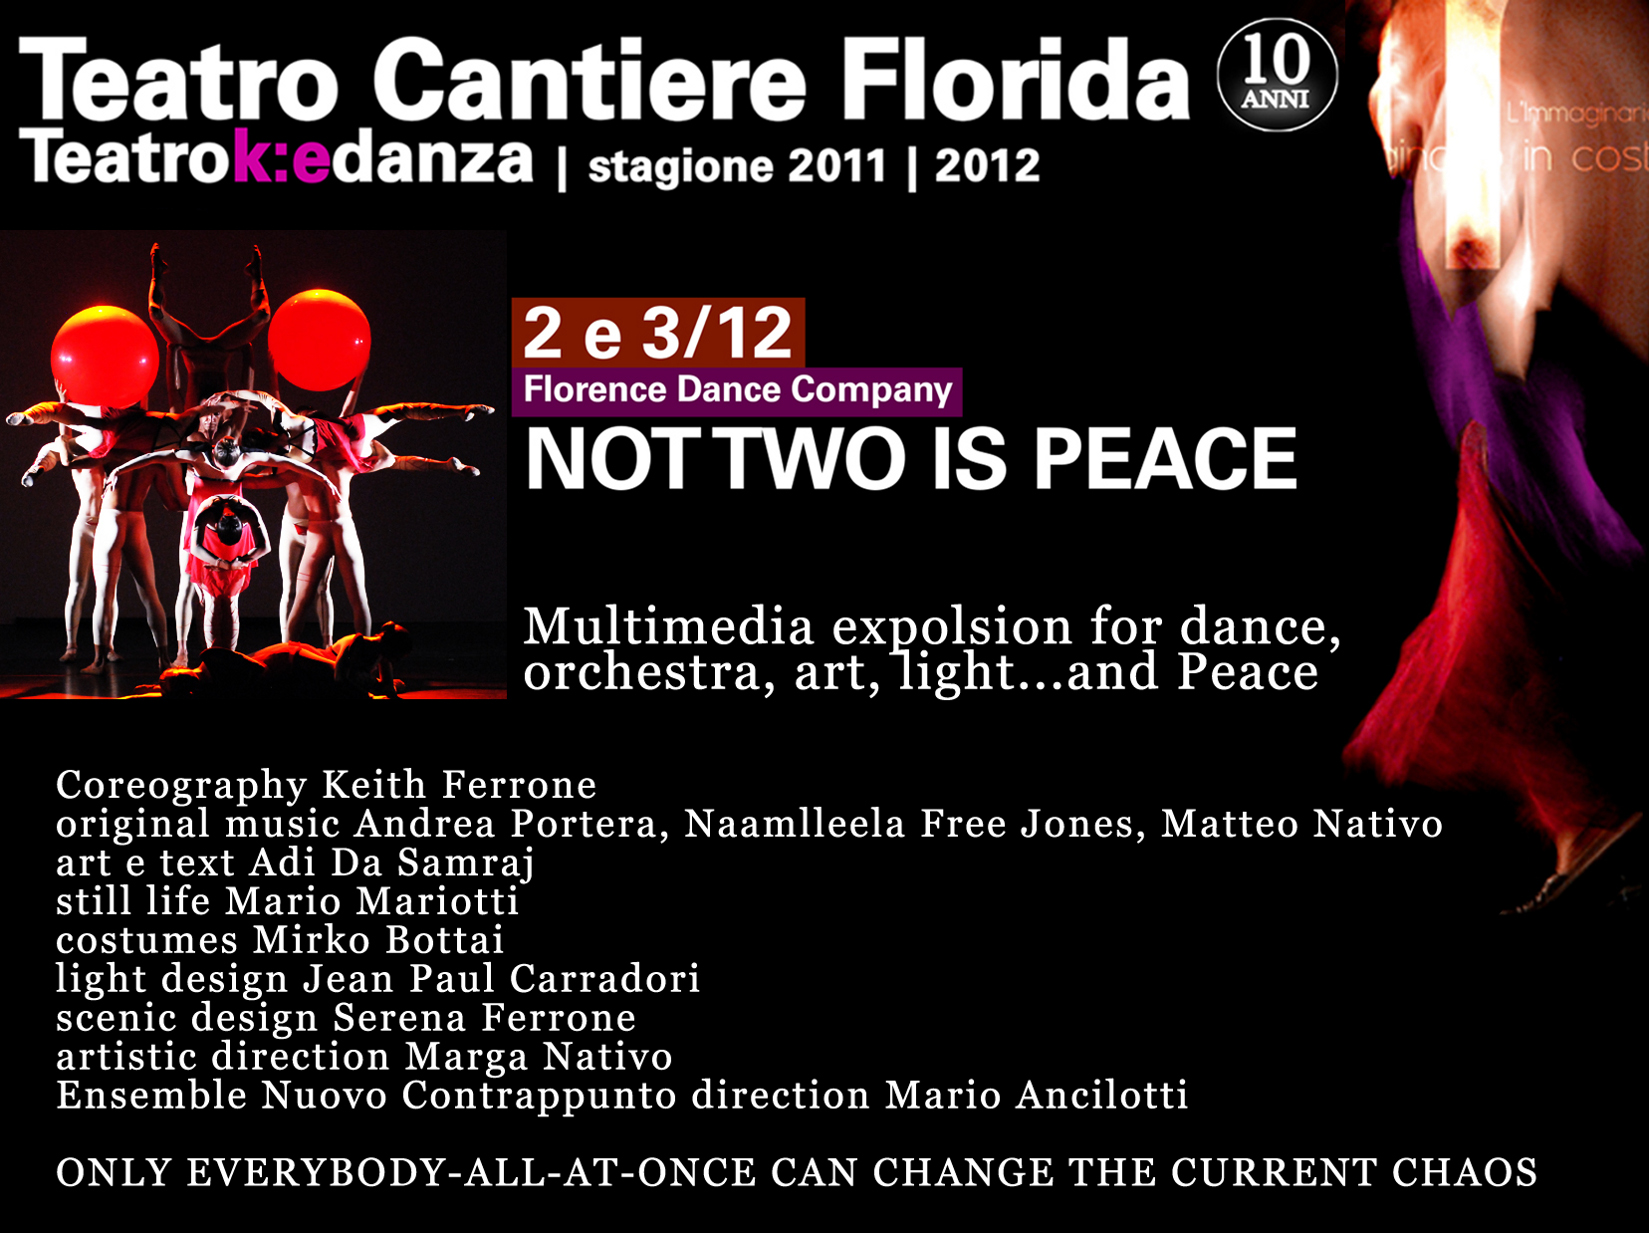 FLORENCE DANCE COMPANY AL TEATRO CANTIERE FLORIDA